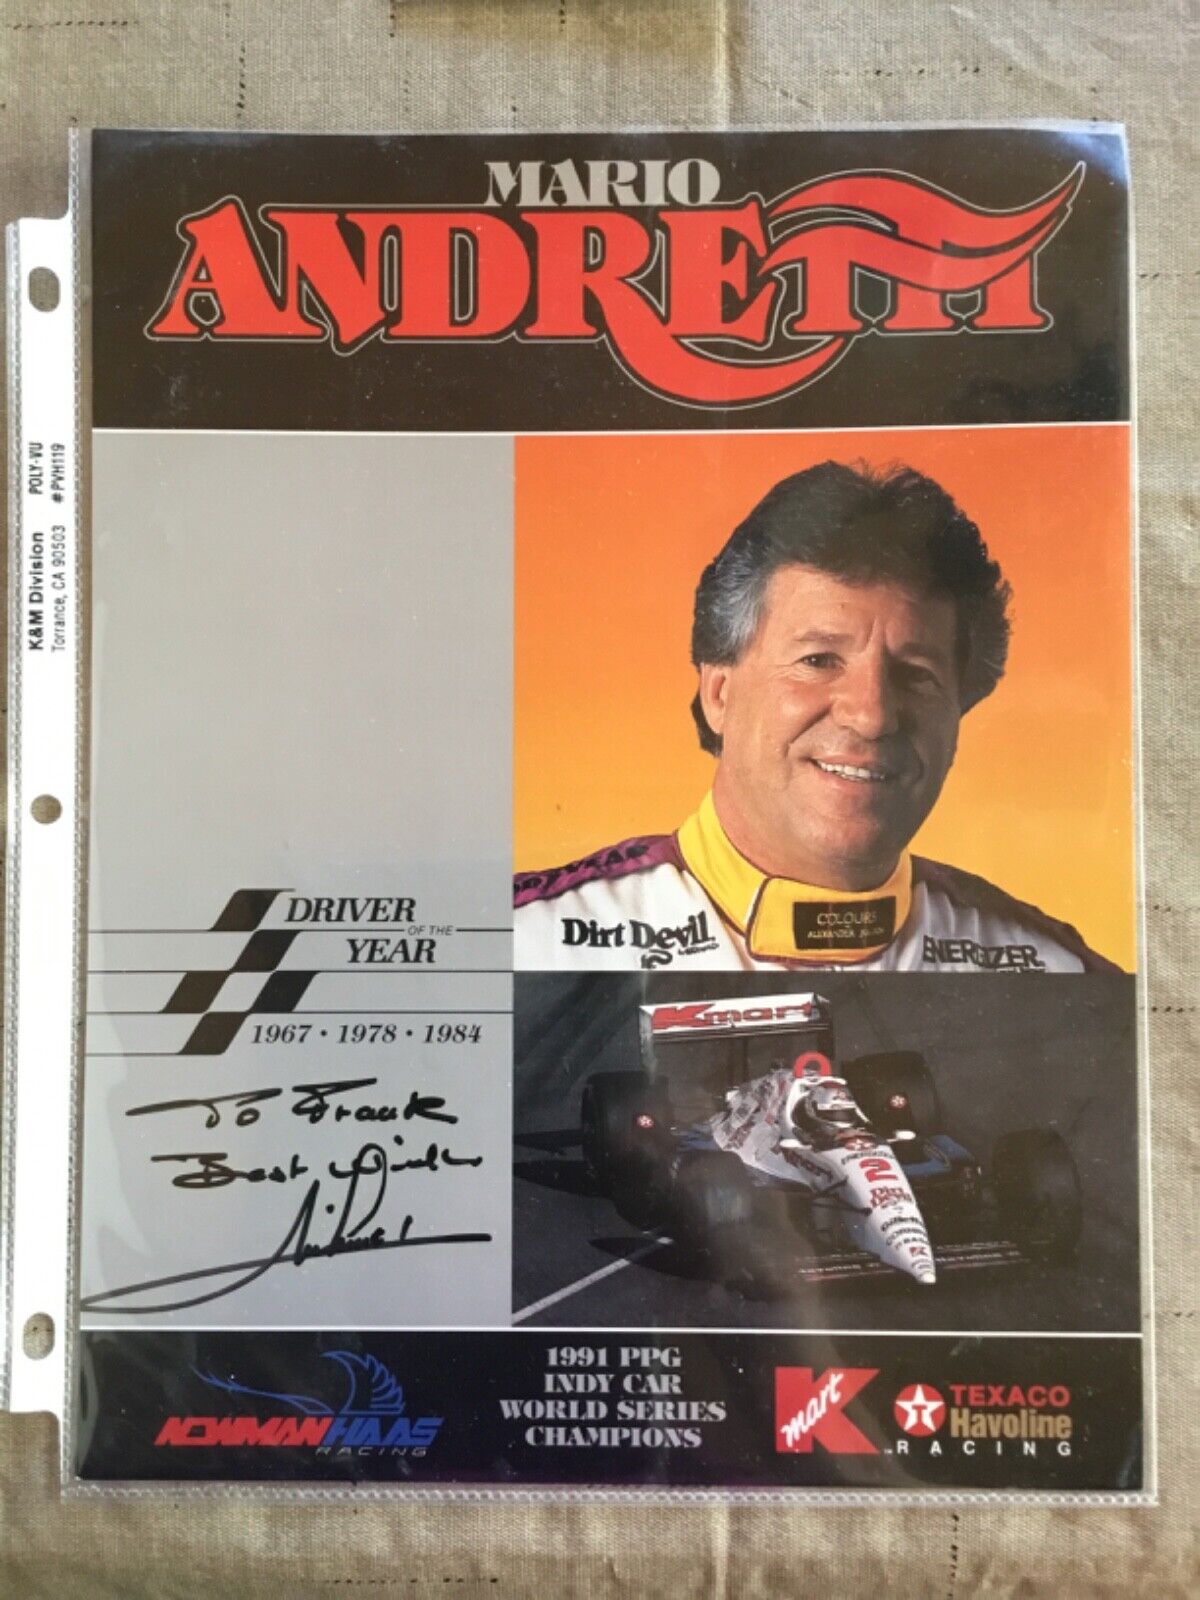 Mario Andretti Signed Photo 8x10 Original 1991 PPG World Series Champions